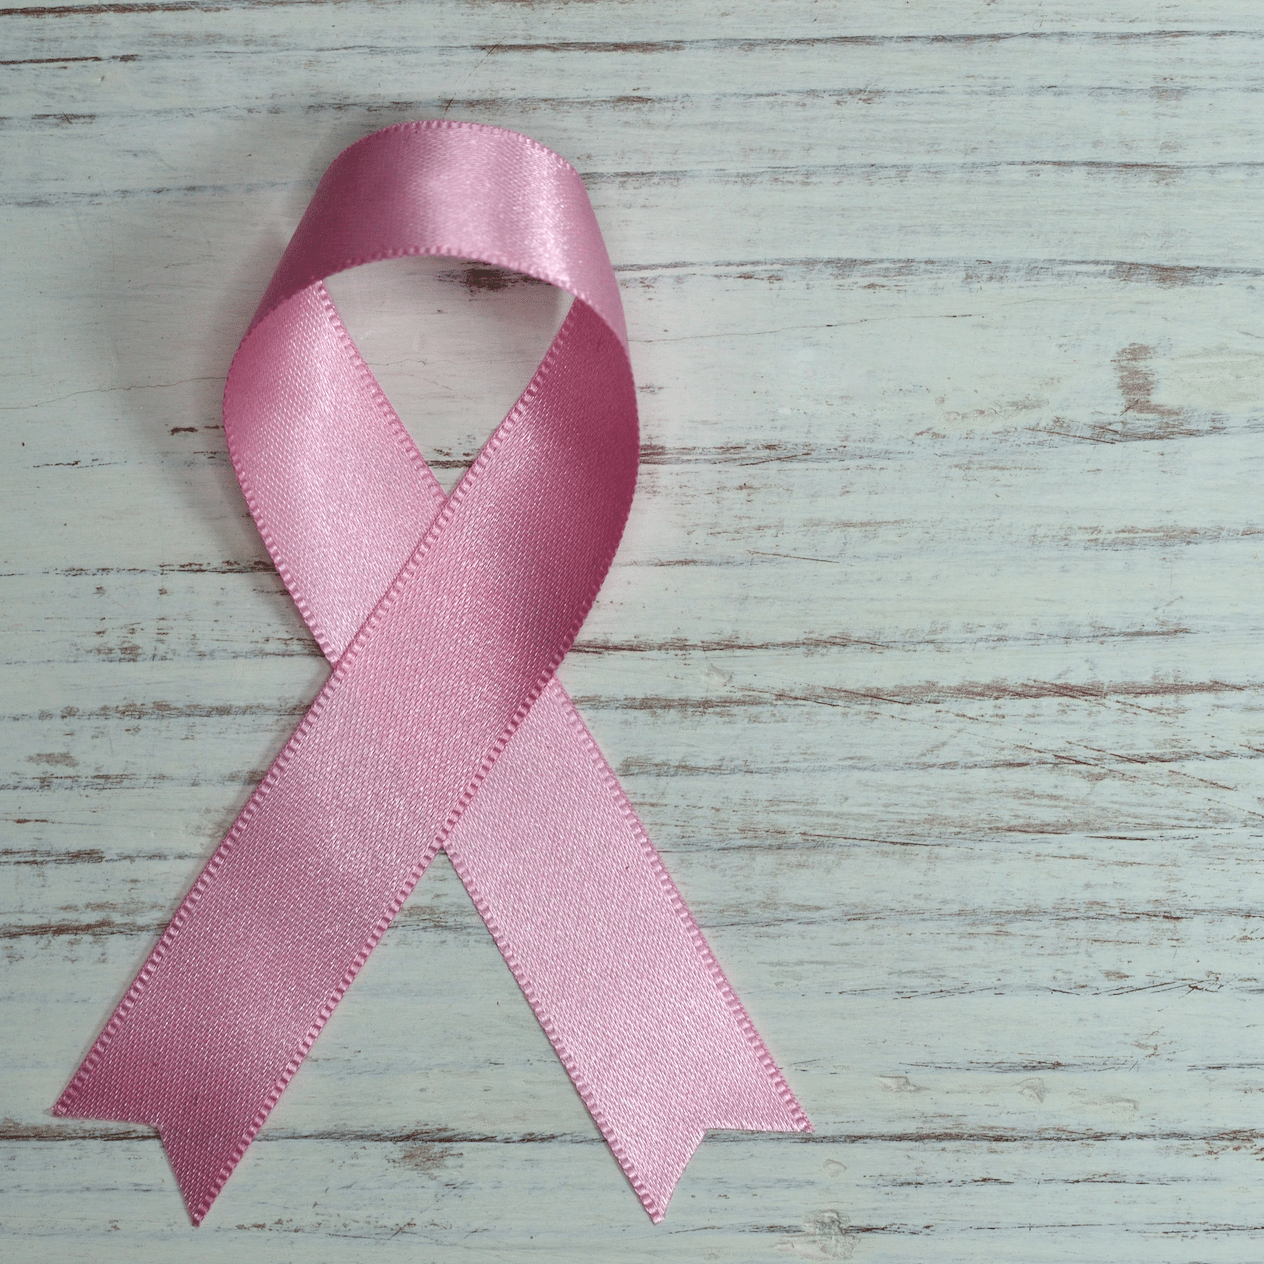 breast cancer awareness october 2019